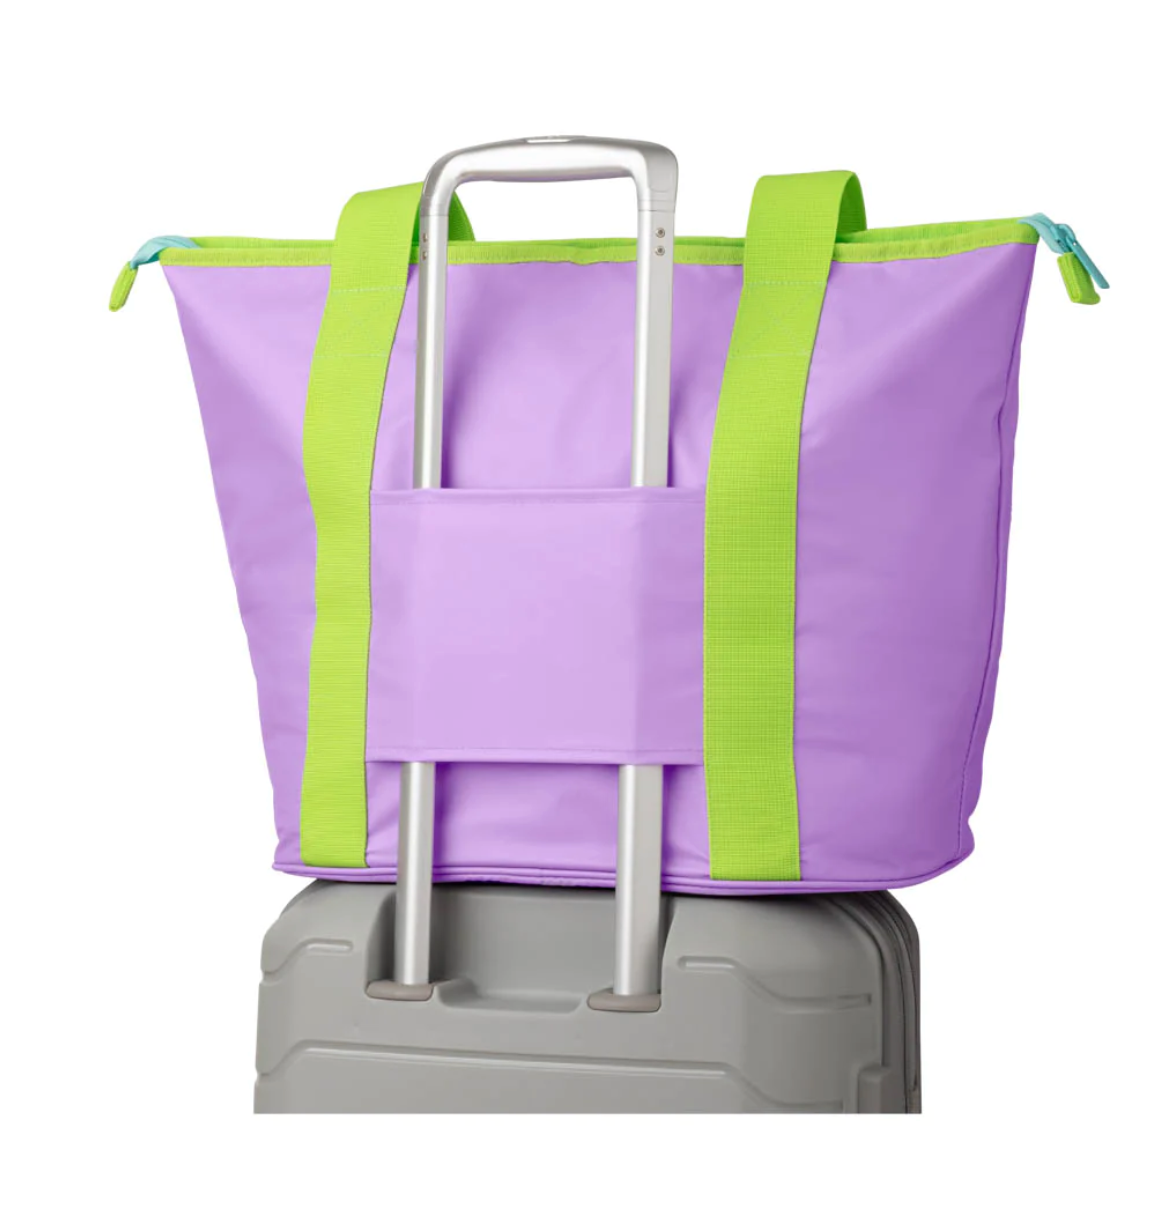 Ultra Violet Zippi Tote Bag